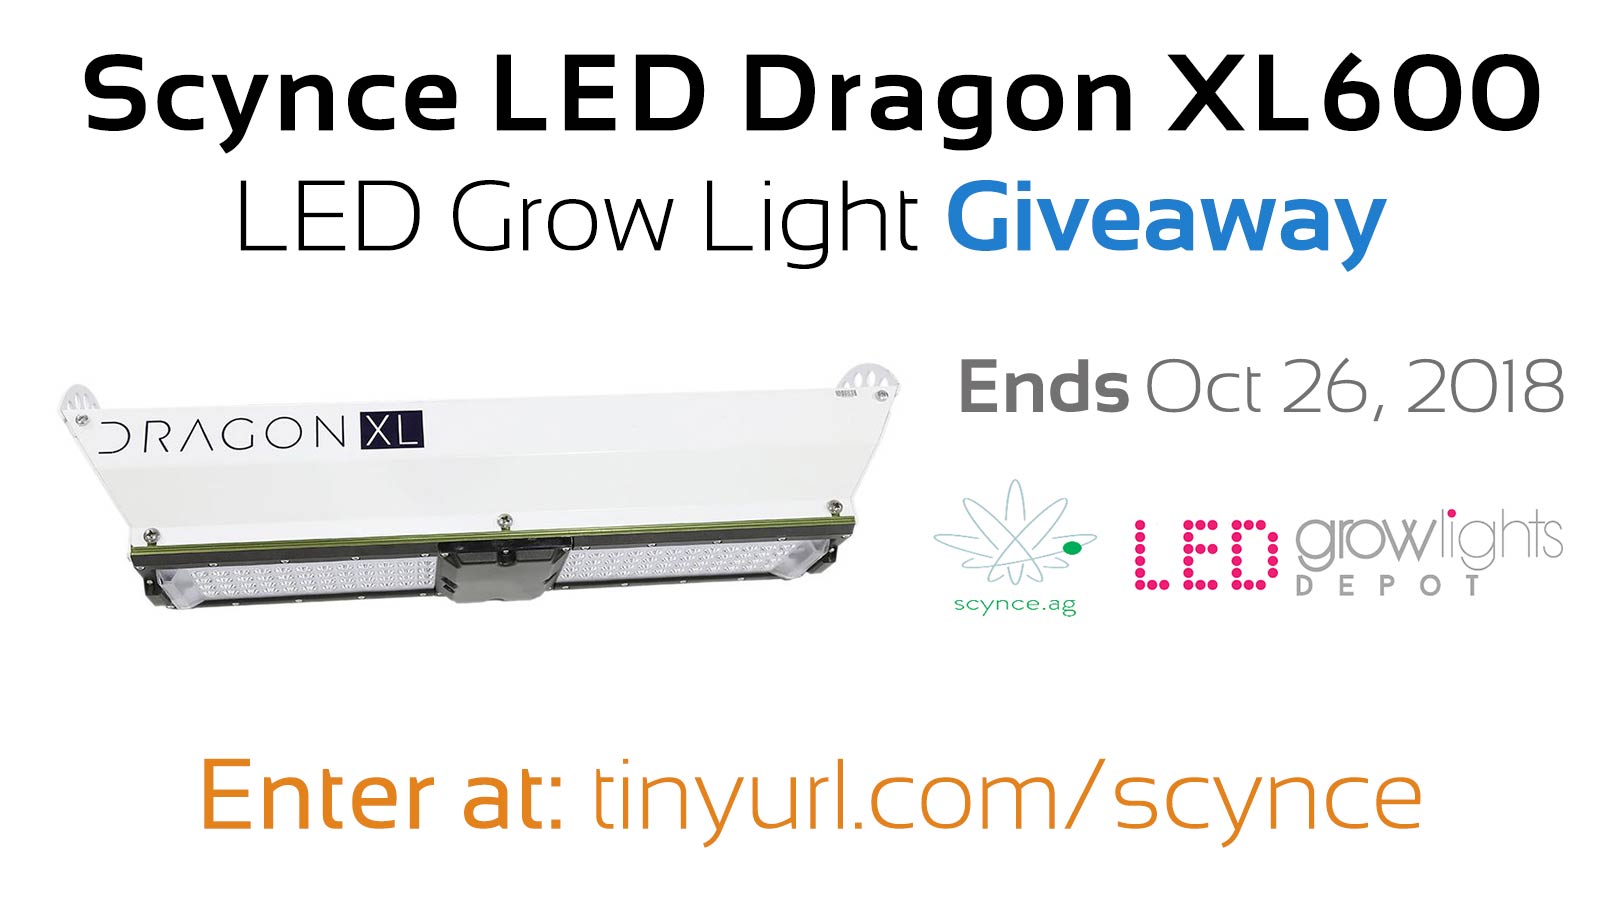 Scynce LED Dragon XL600 LED Grow Light Giveaway